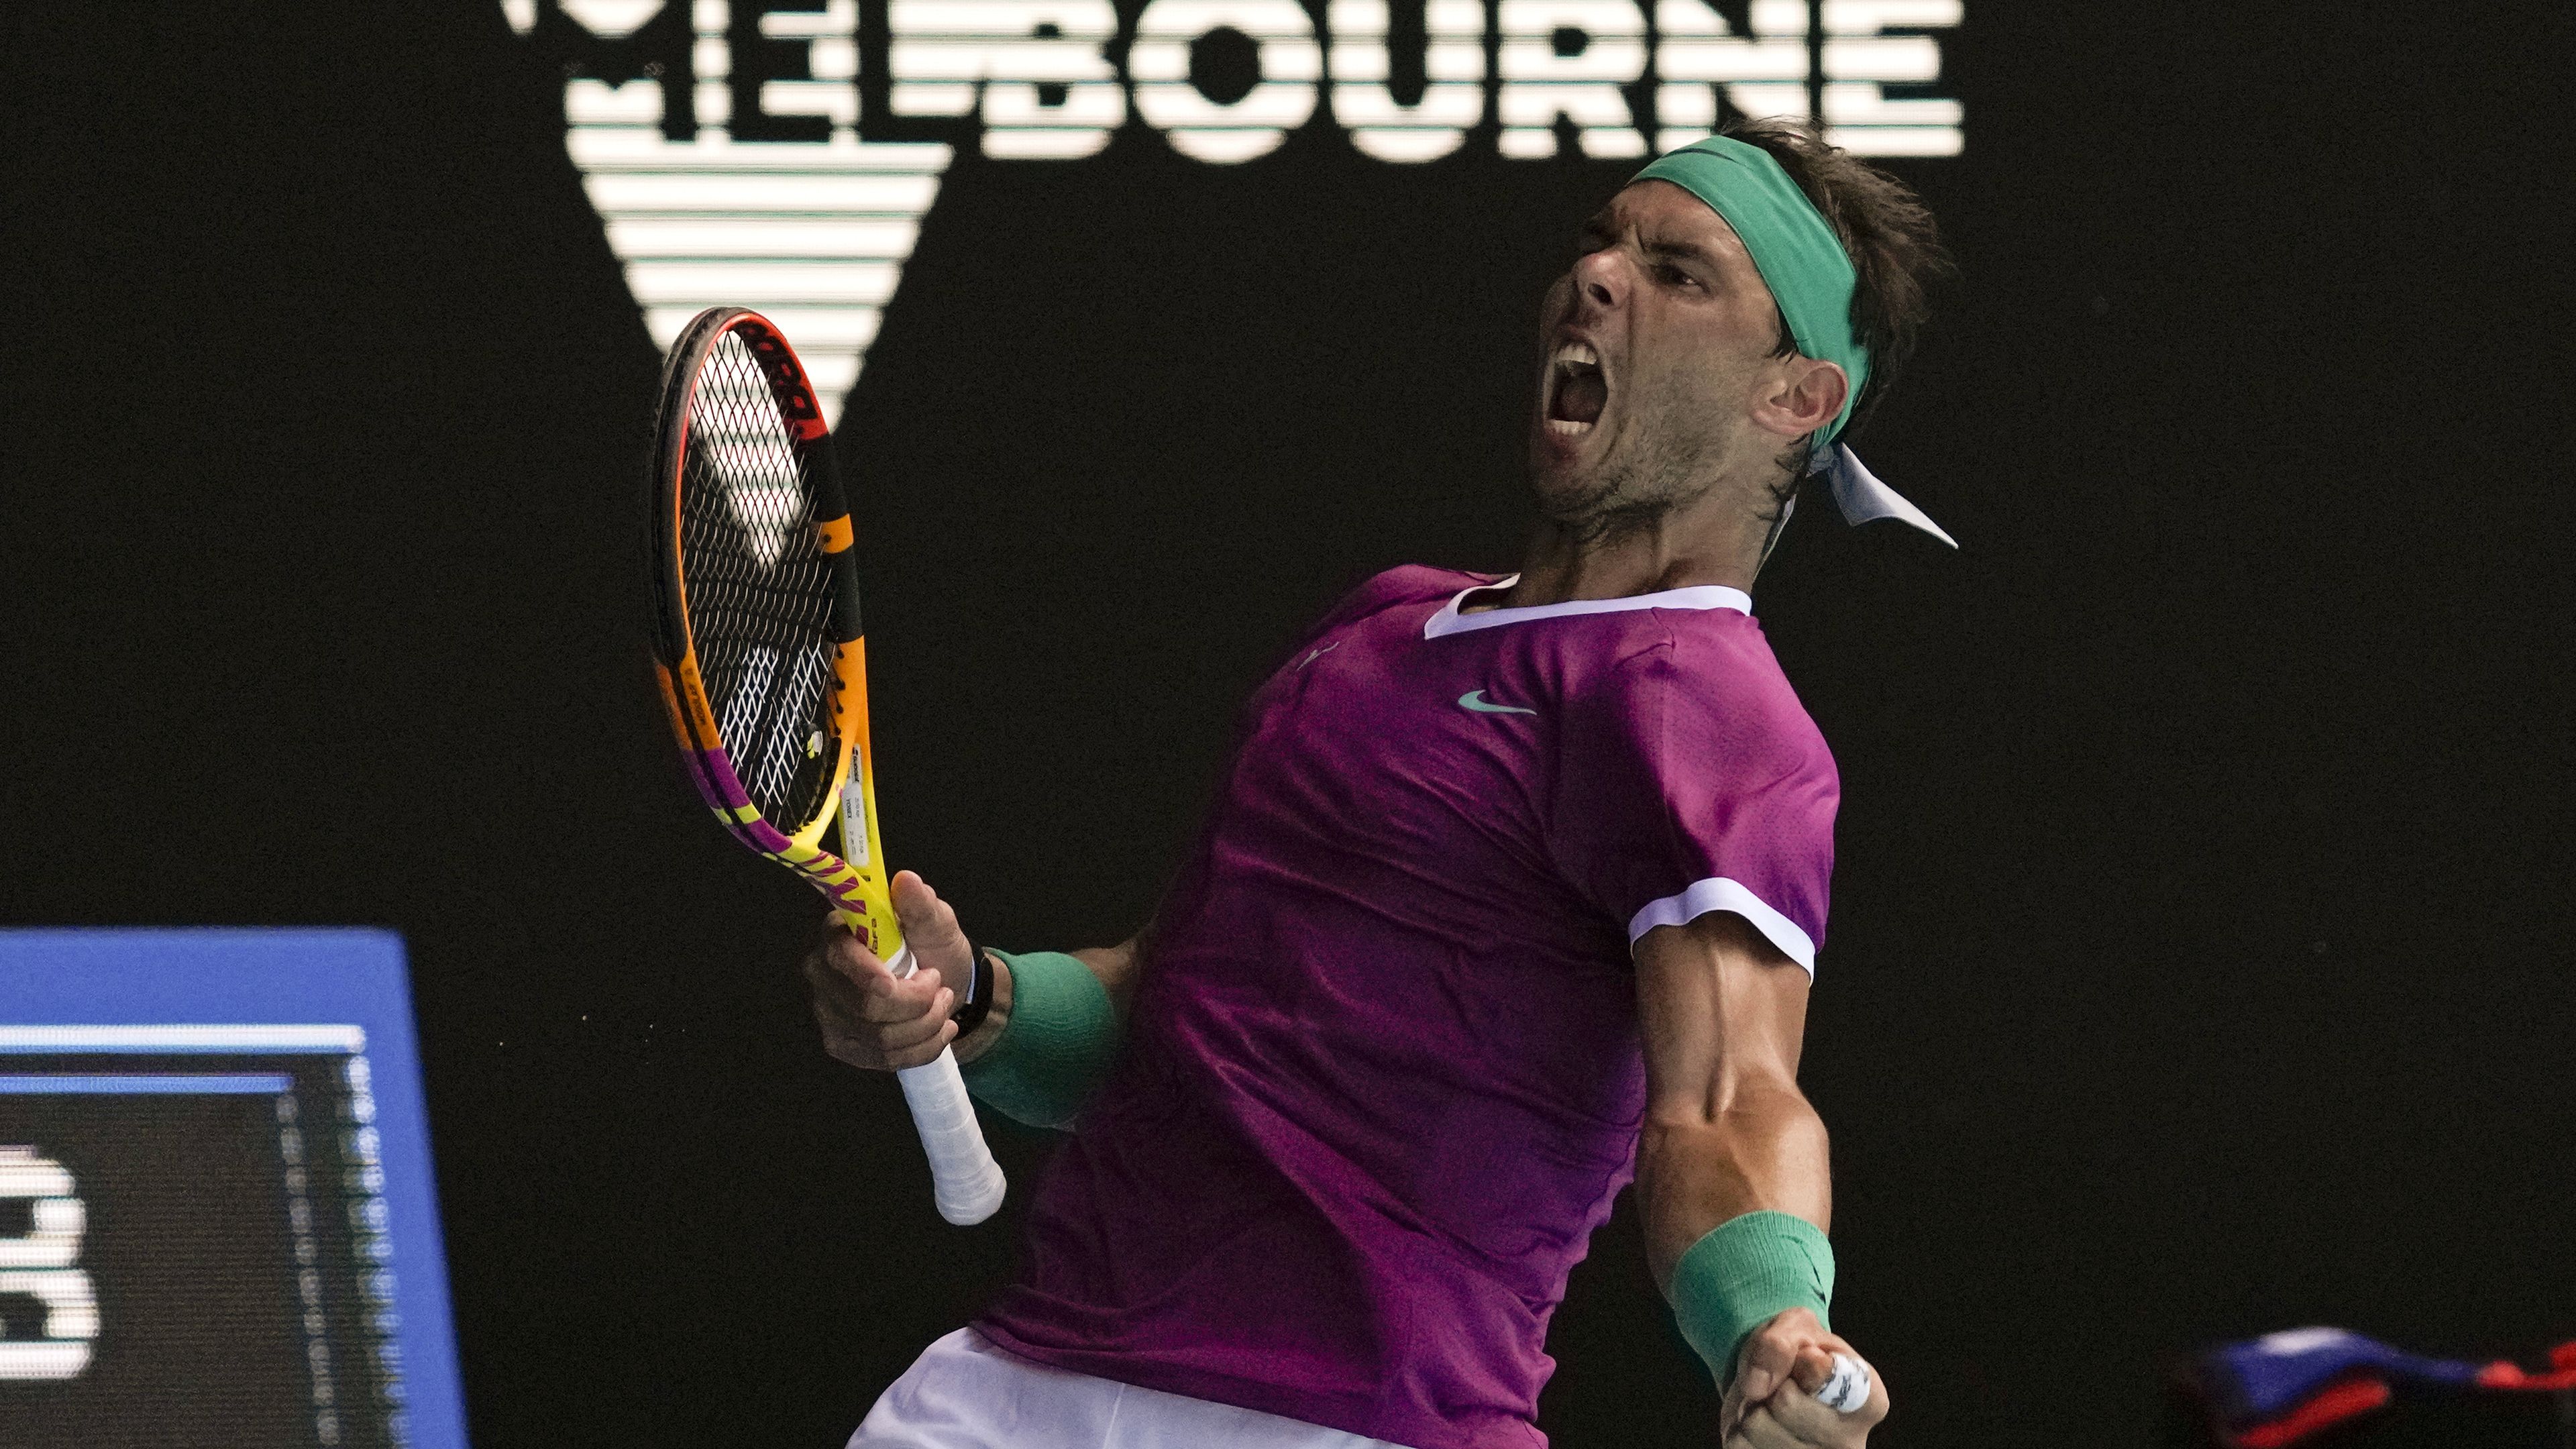 Rafael Nadal overcomes 'emotional' first set to win way into Australian Open quarter finals